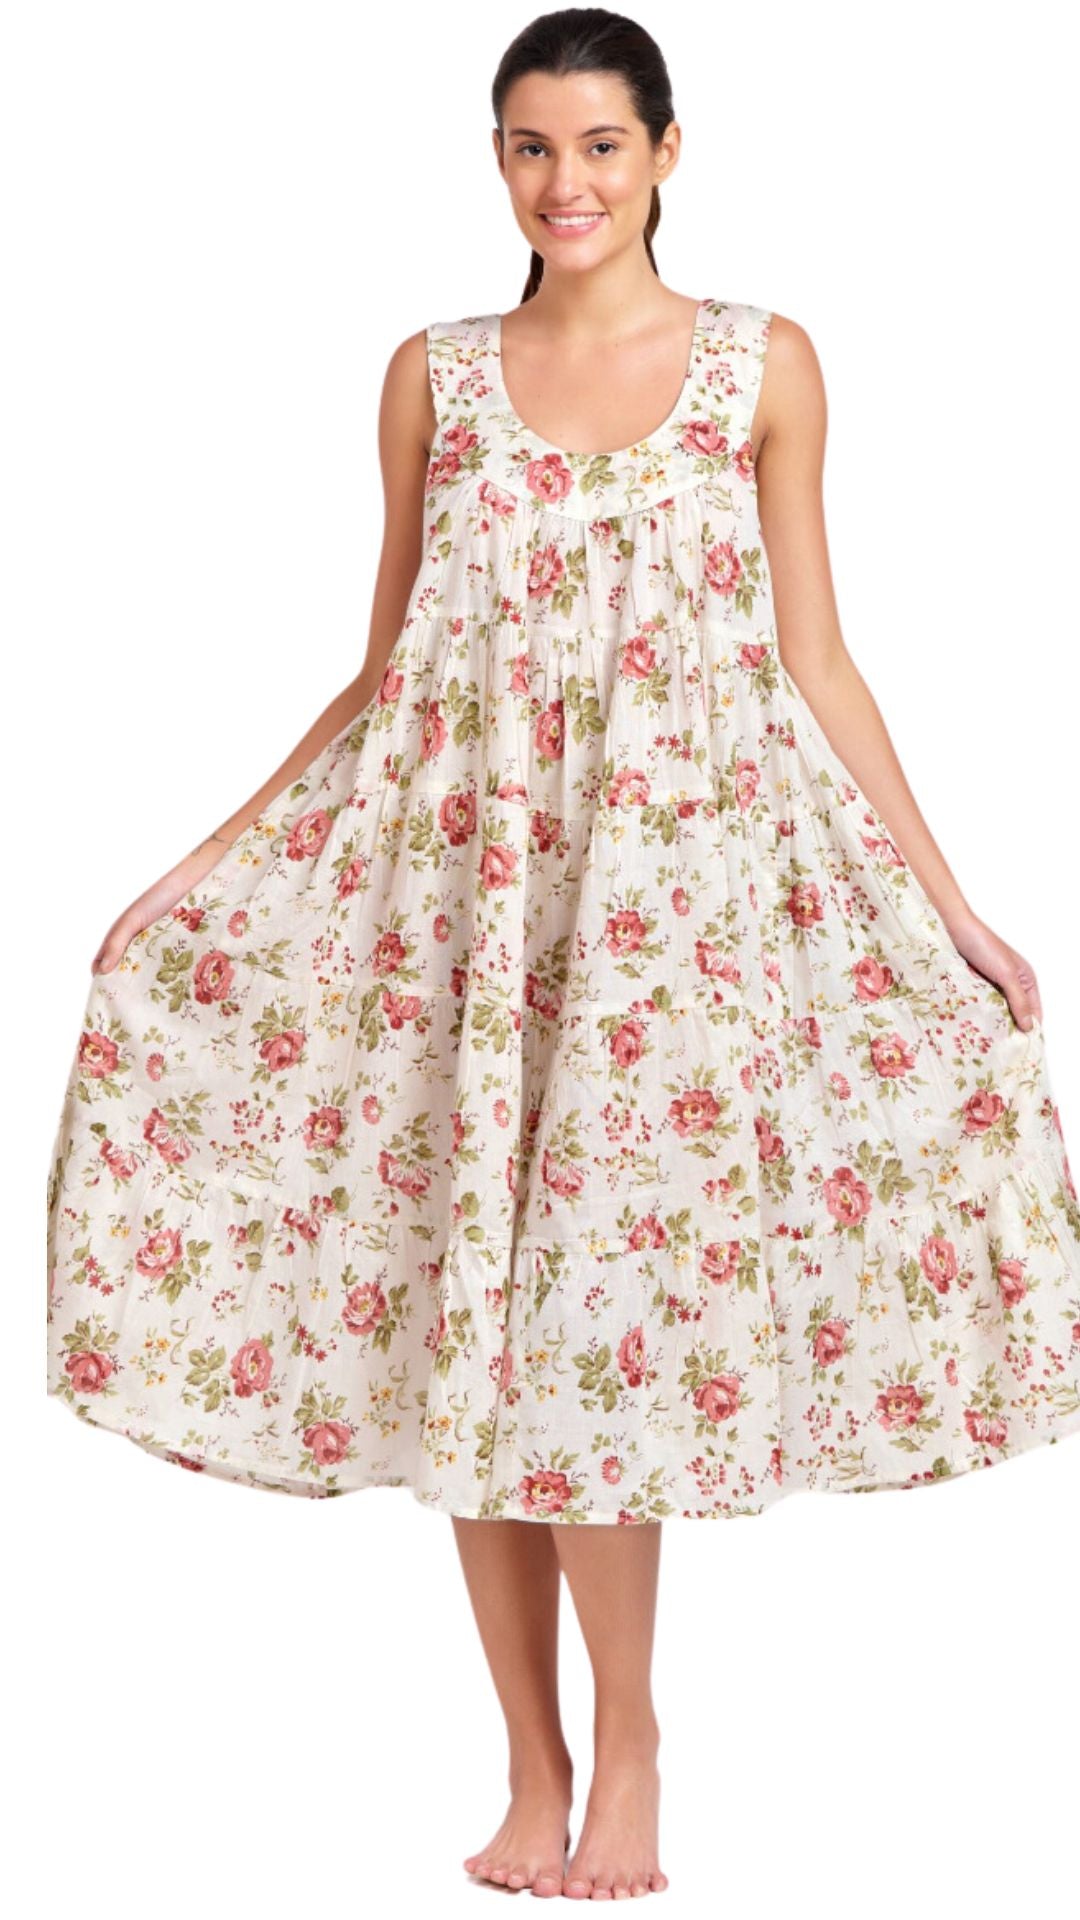 Modern floral nightgowns - Australia